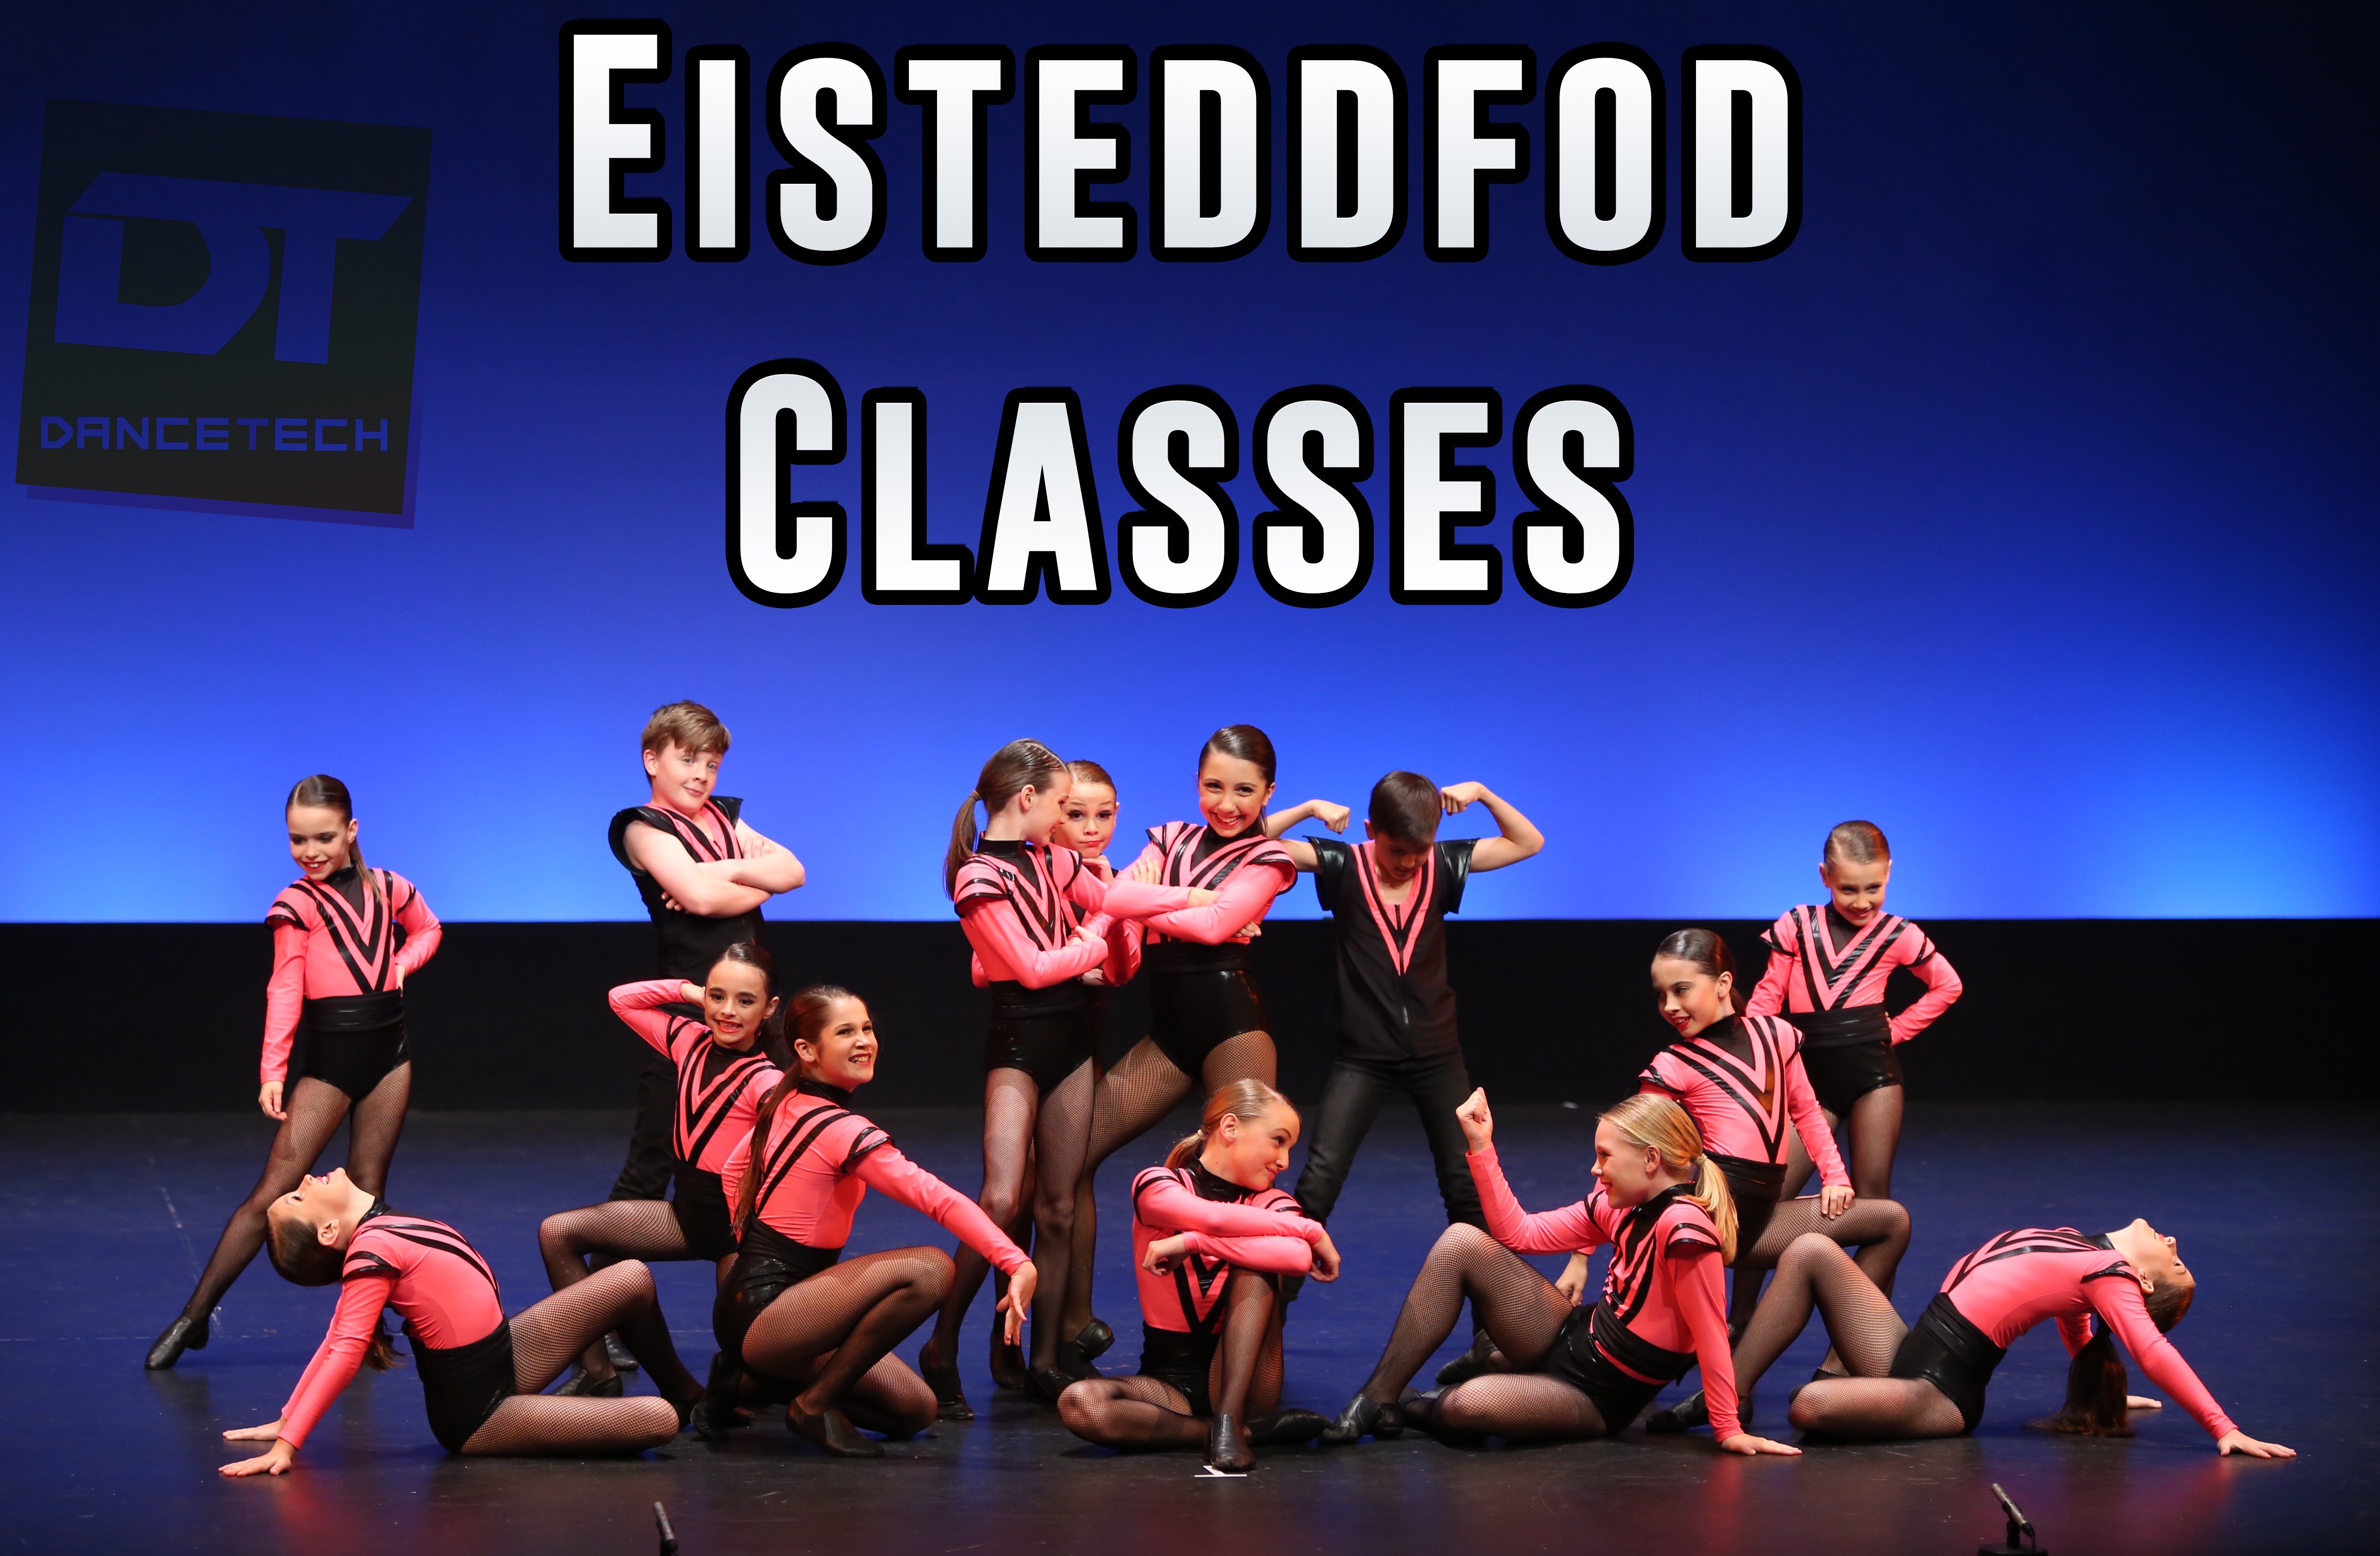 eisteddfod-classes-website-banner